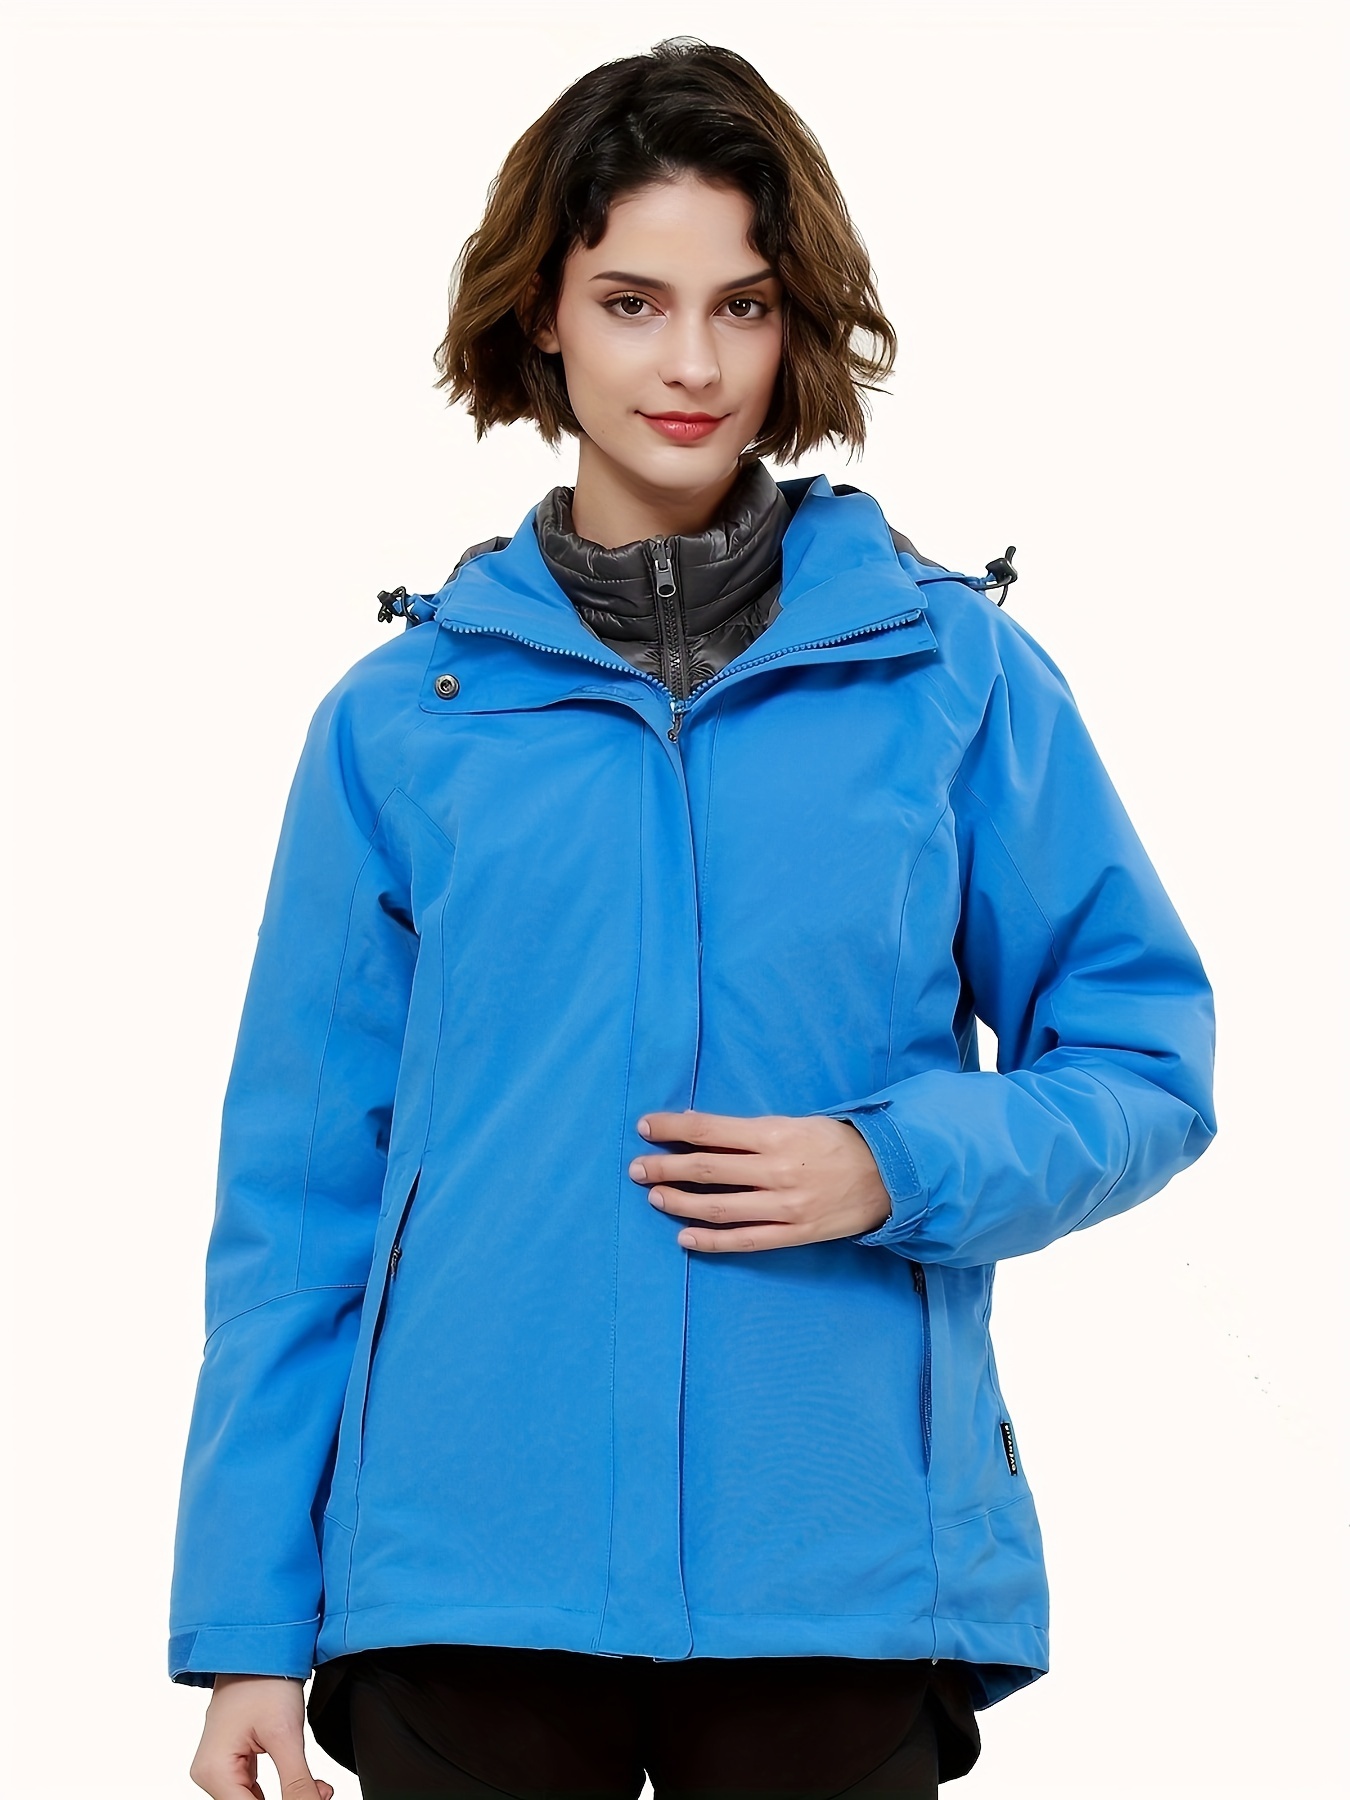 3-in-1 Winter Ski Jacket, Snowboarding Jacket, Skiing Coat, Long Sleeve Thermal Hooded Jacket, Windproof Hard-Shell Outdoor Snow Jacket, Women's